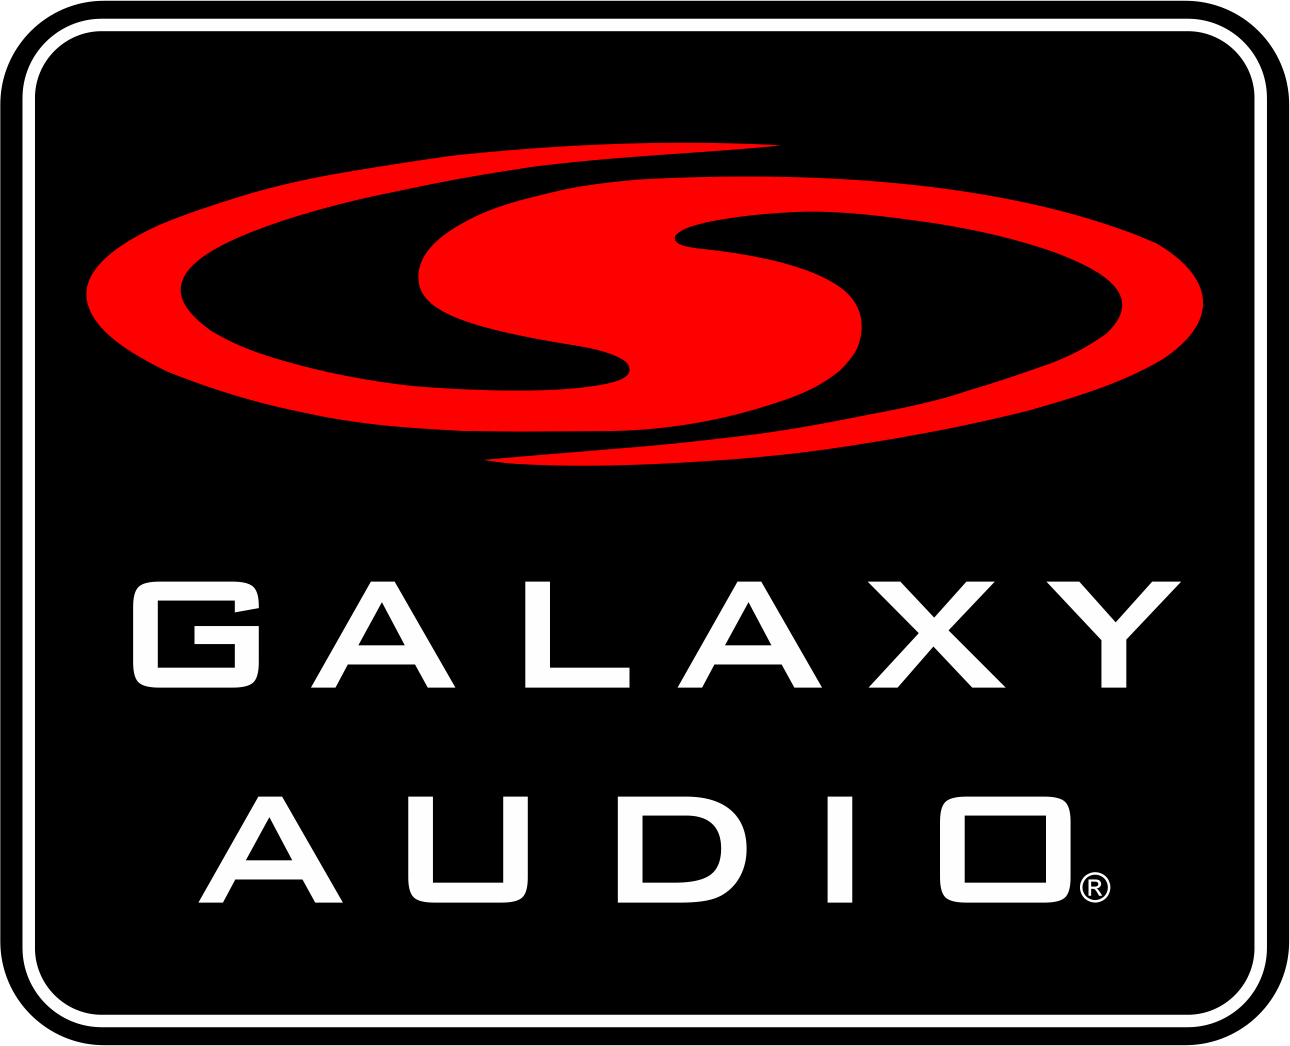 Galaxy Audio News and Events | Wichita, KS